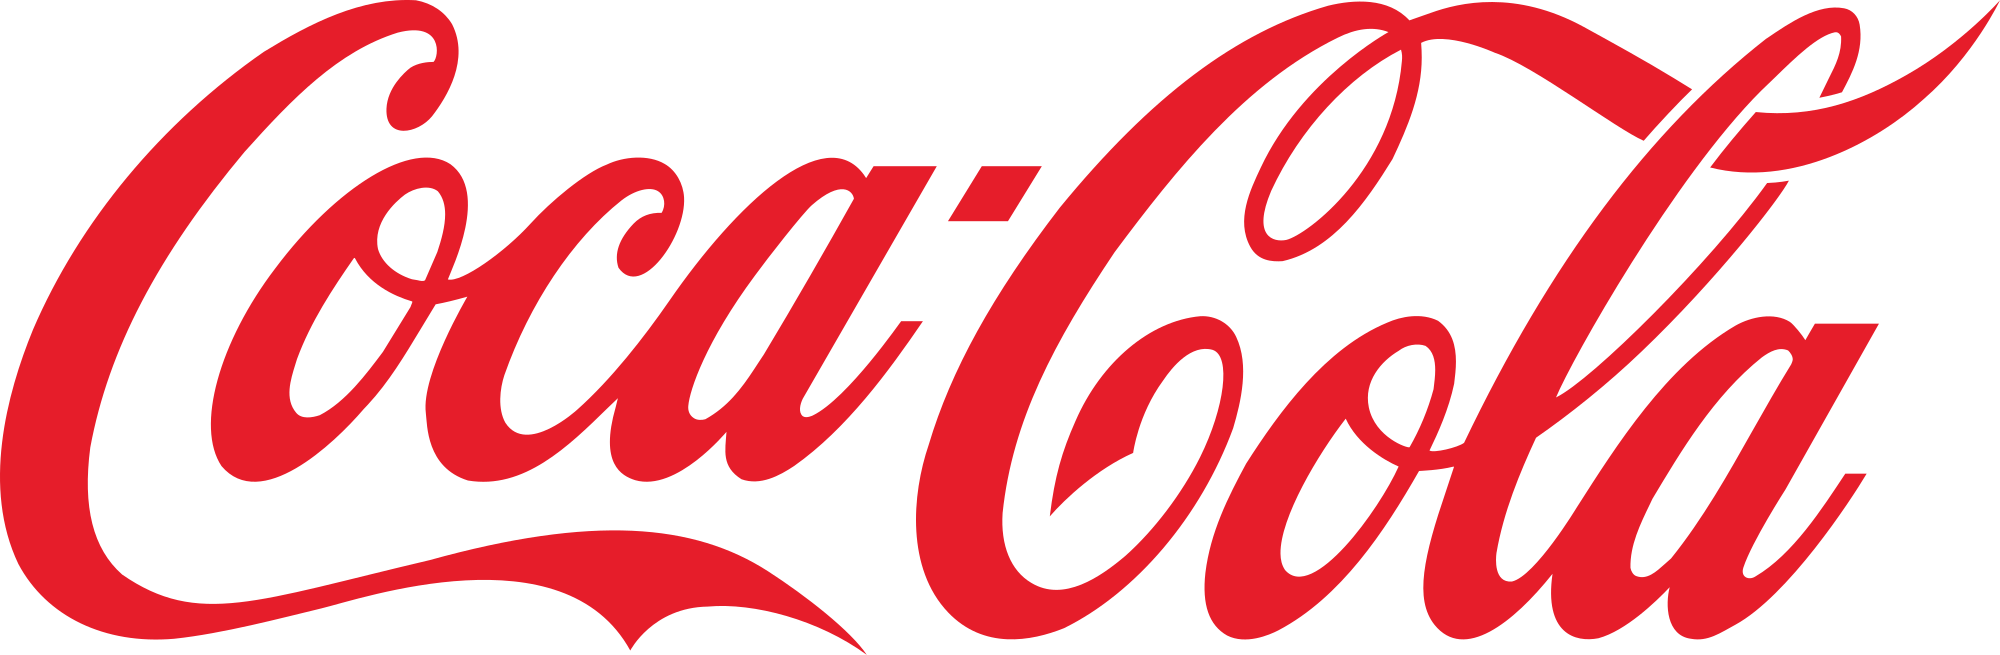 Coca Cola svg #17, Download drawings